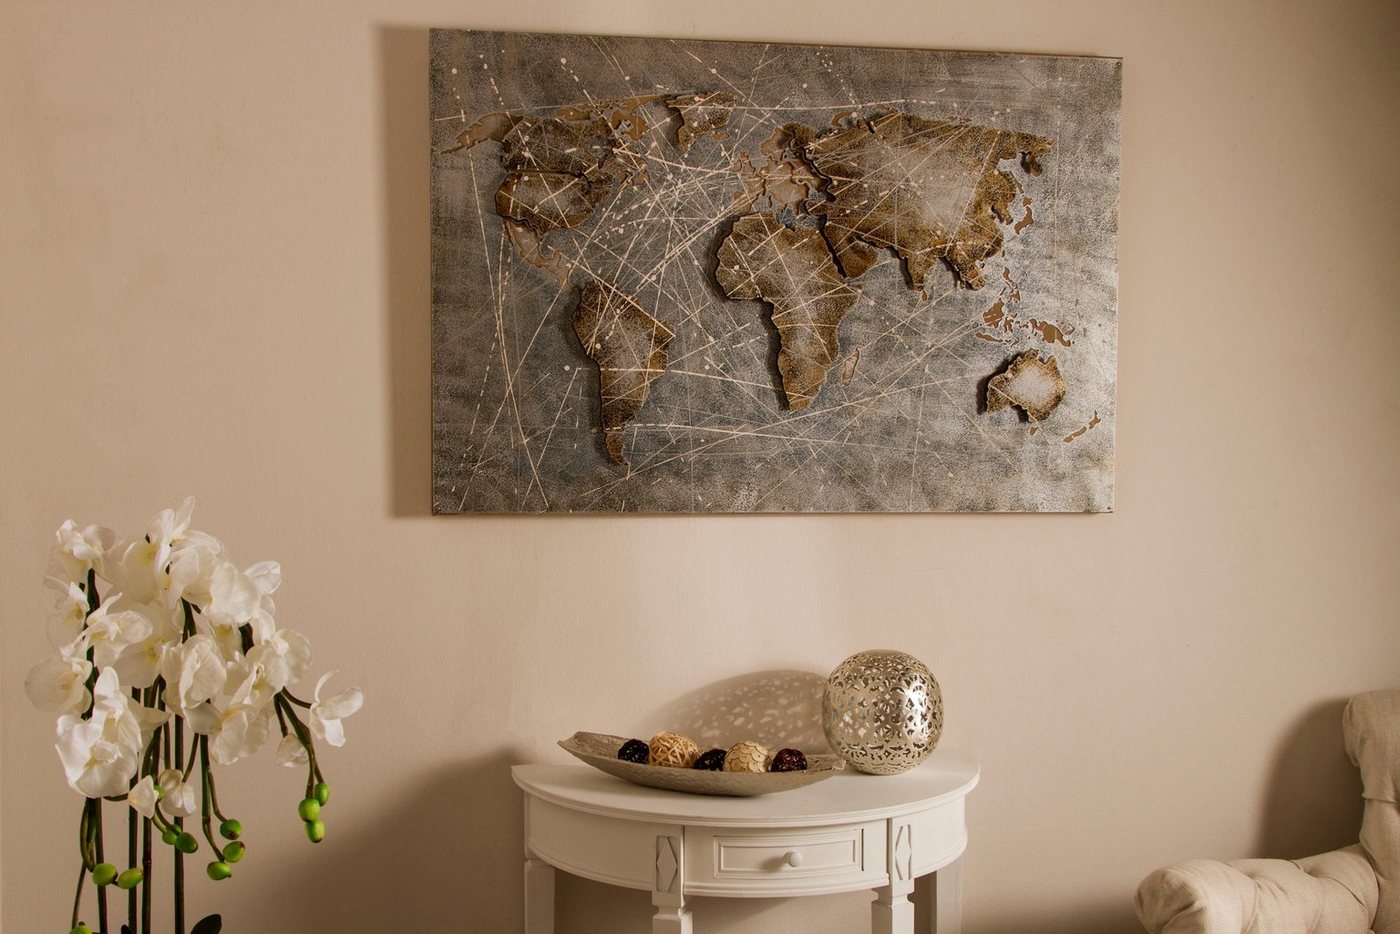 Myflair Möbel & Accessoires Leinwandbild Canvas Earth", mit Metall, Motiv Weltkarte, 120x80 cm, Wohnzimmer" von Myflair Möbel & Accessoires